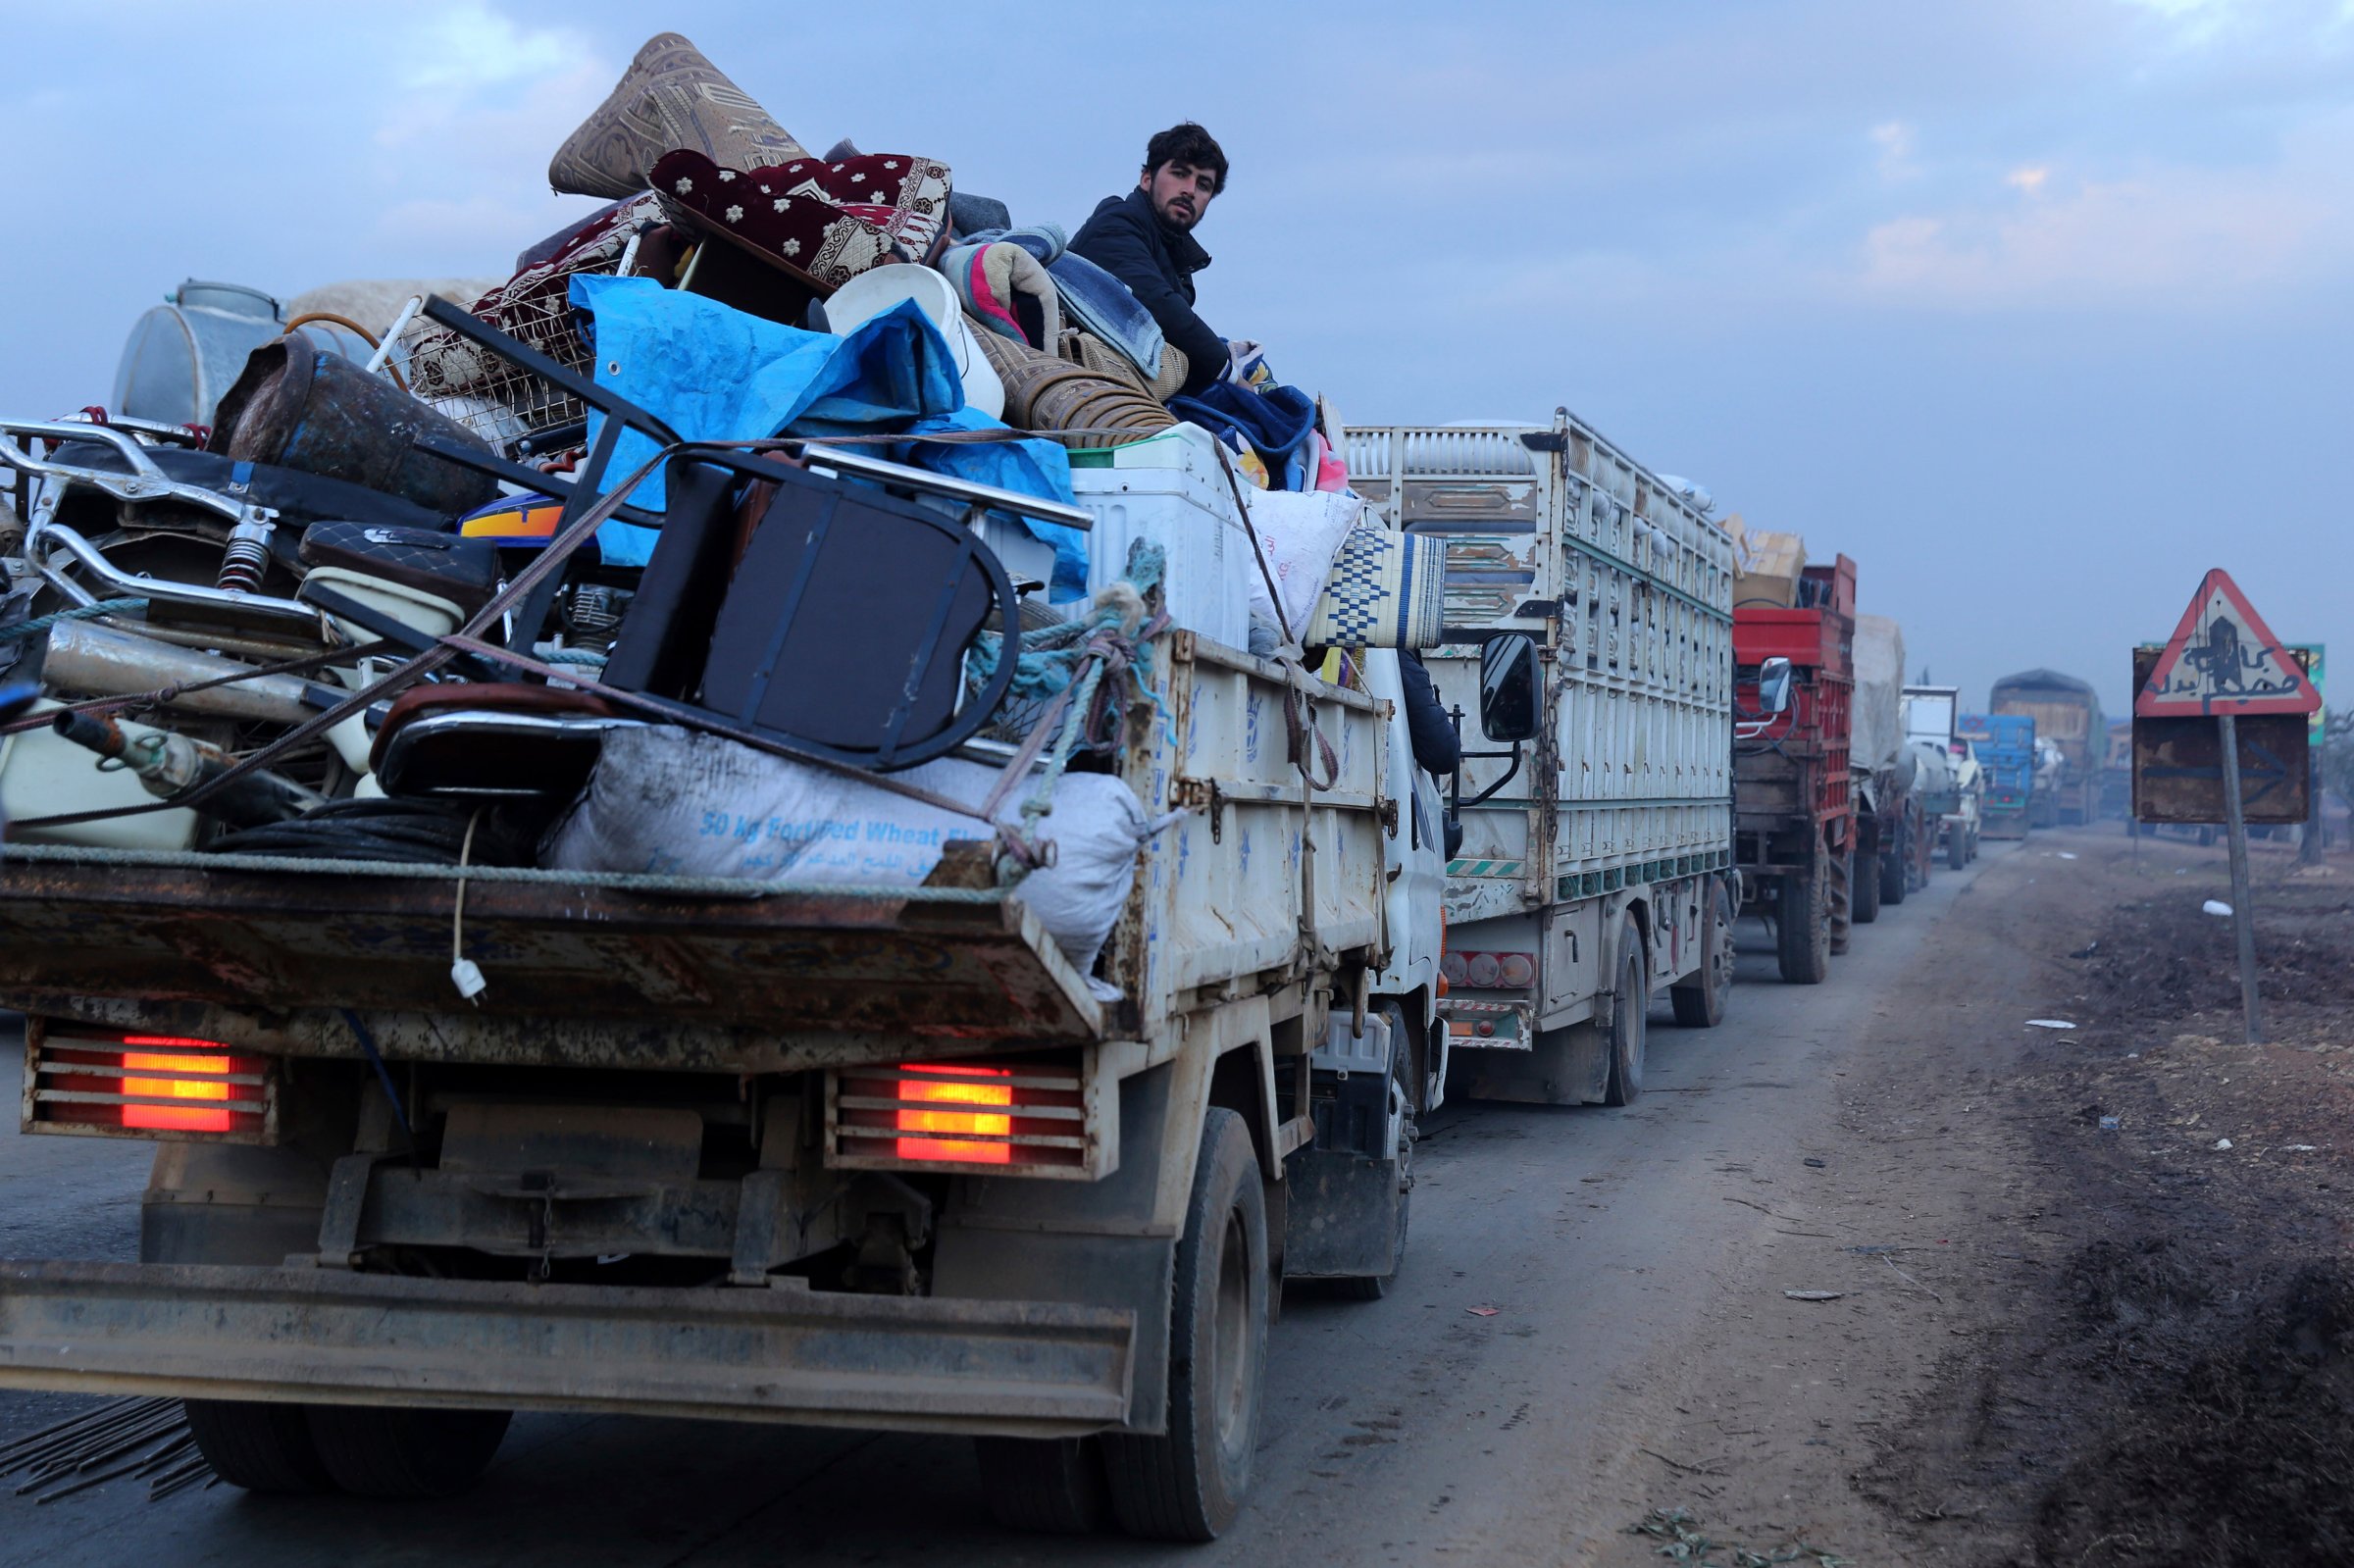 A man rides in a truck as civilians flee